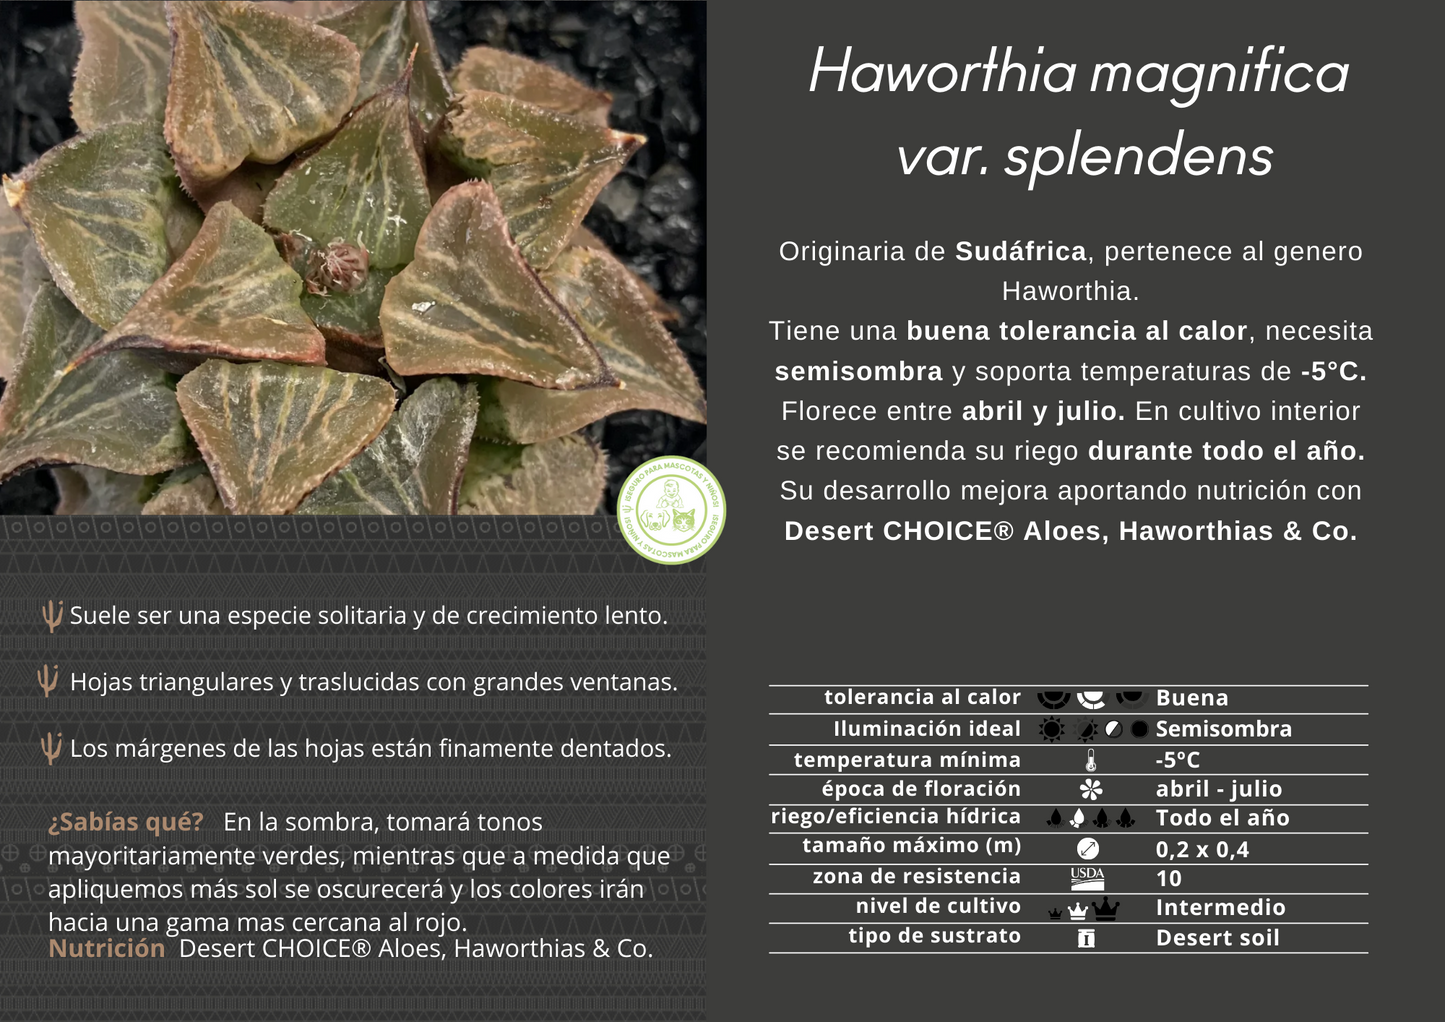 Haworthia magnifica var. splendens Lebenslauf. Natalie